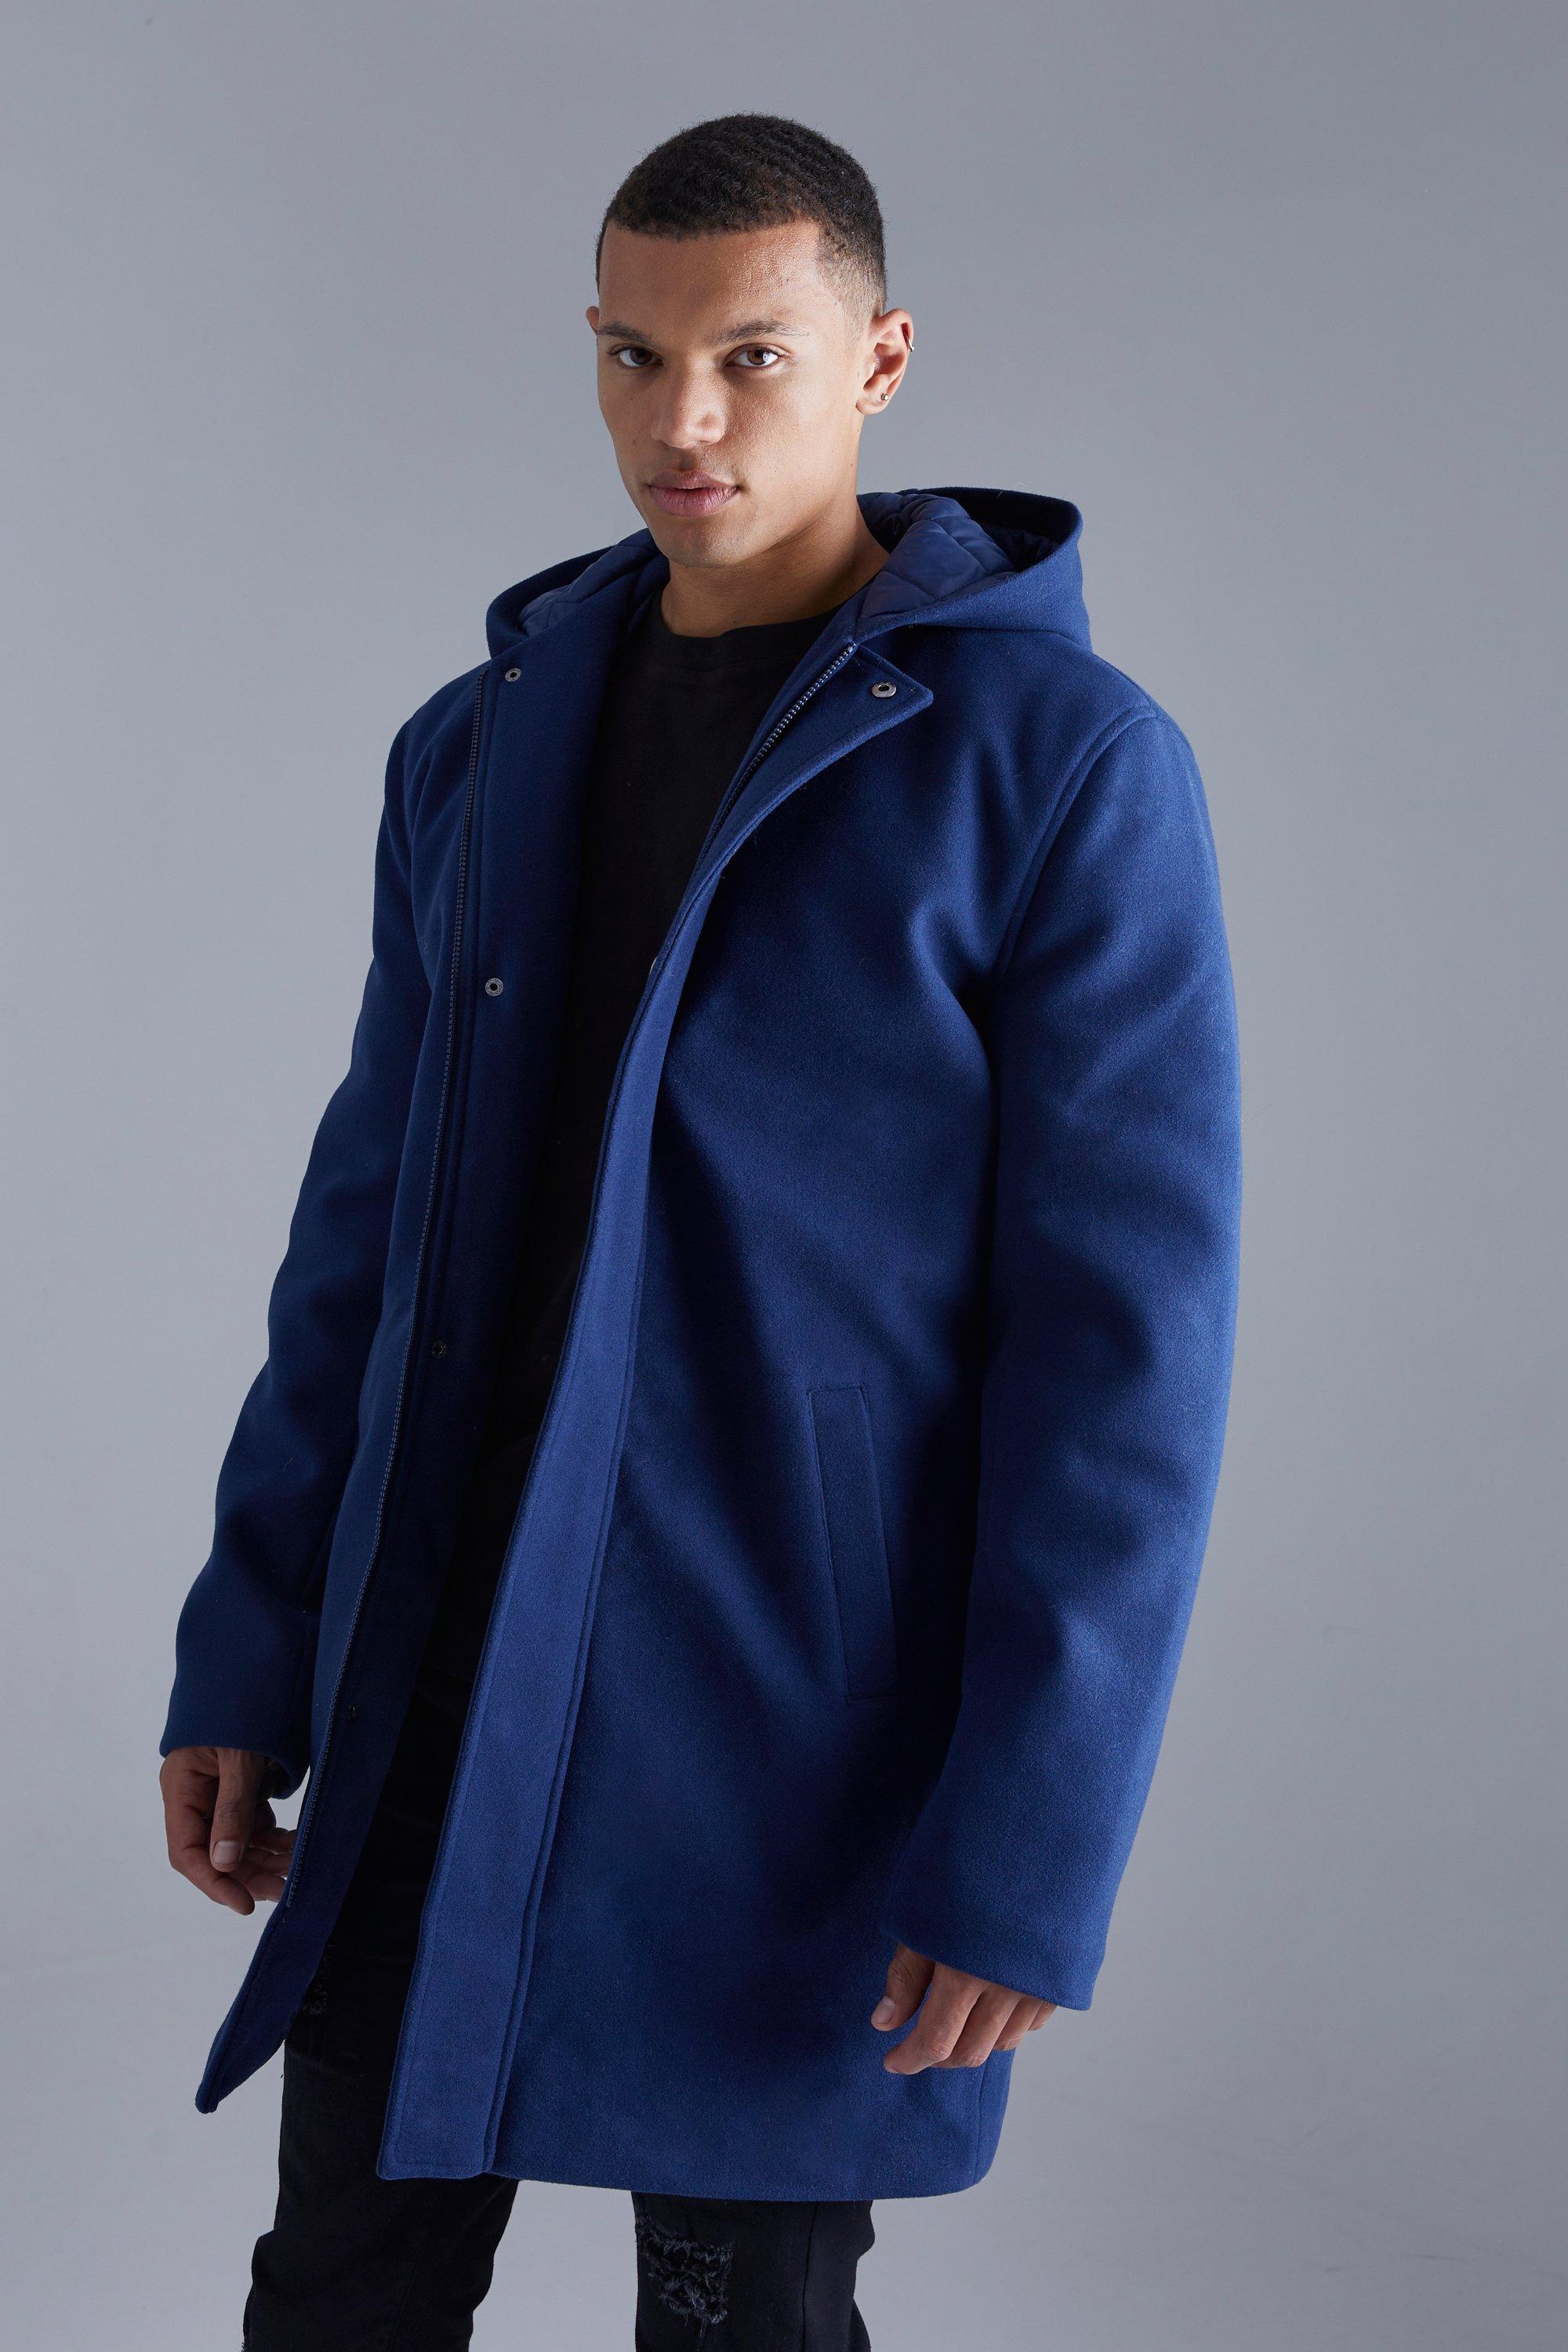 tall - manteau à capuche homme - bleu - s, bleu